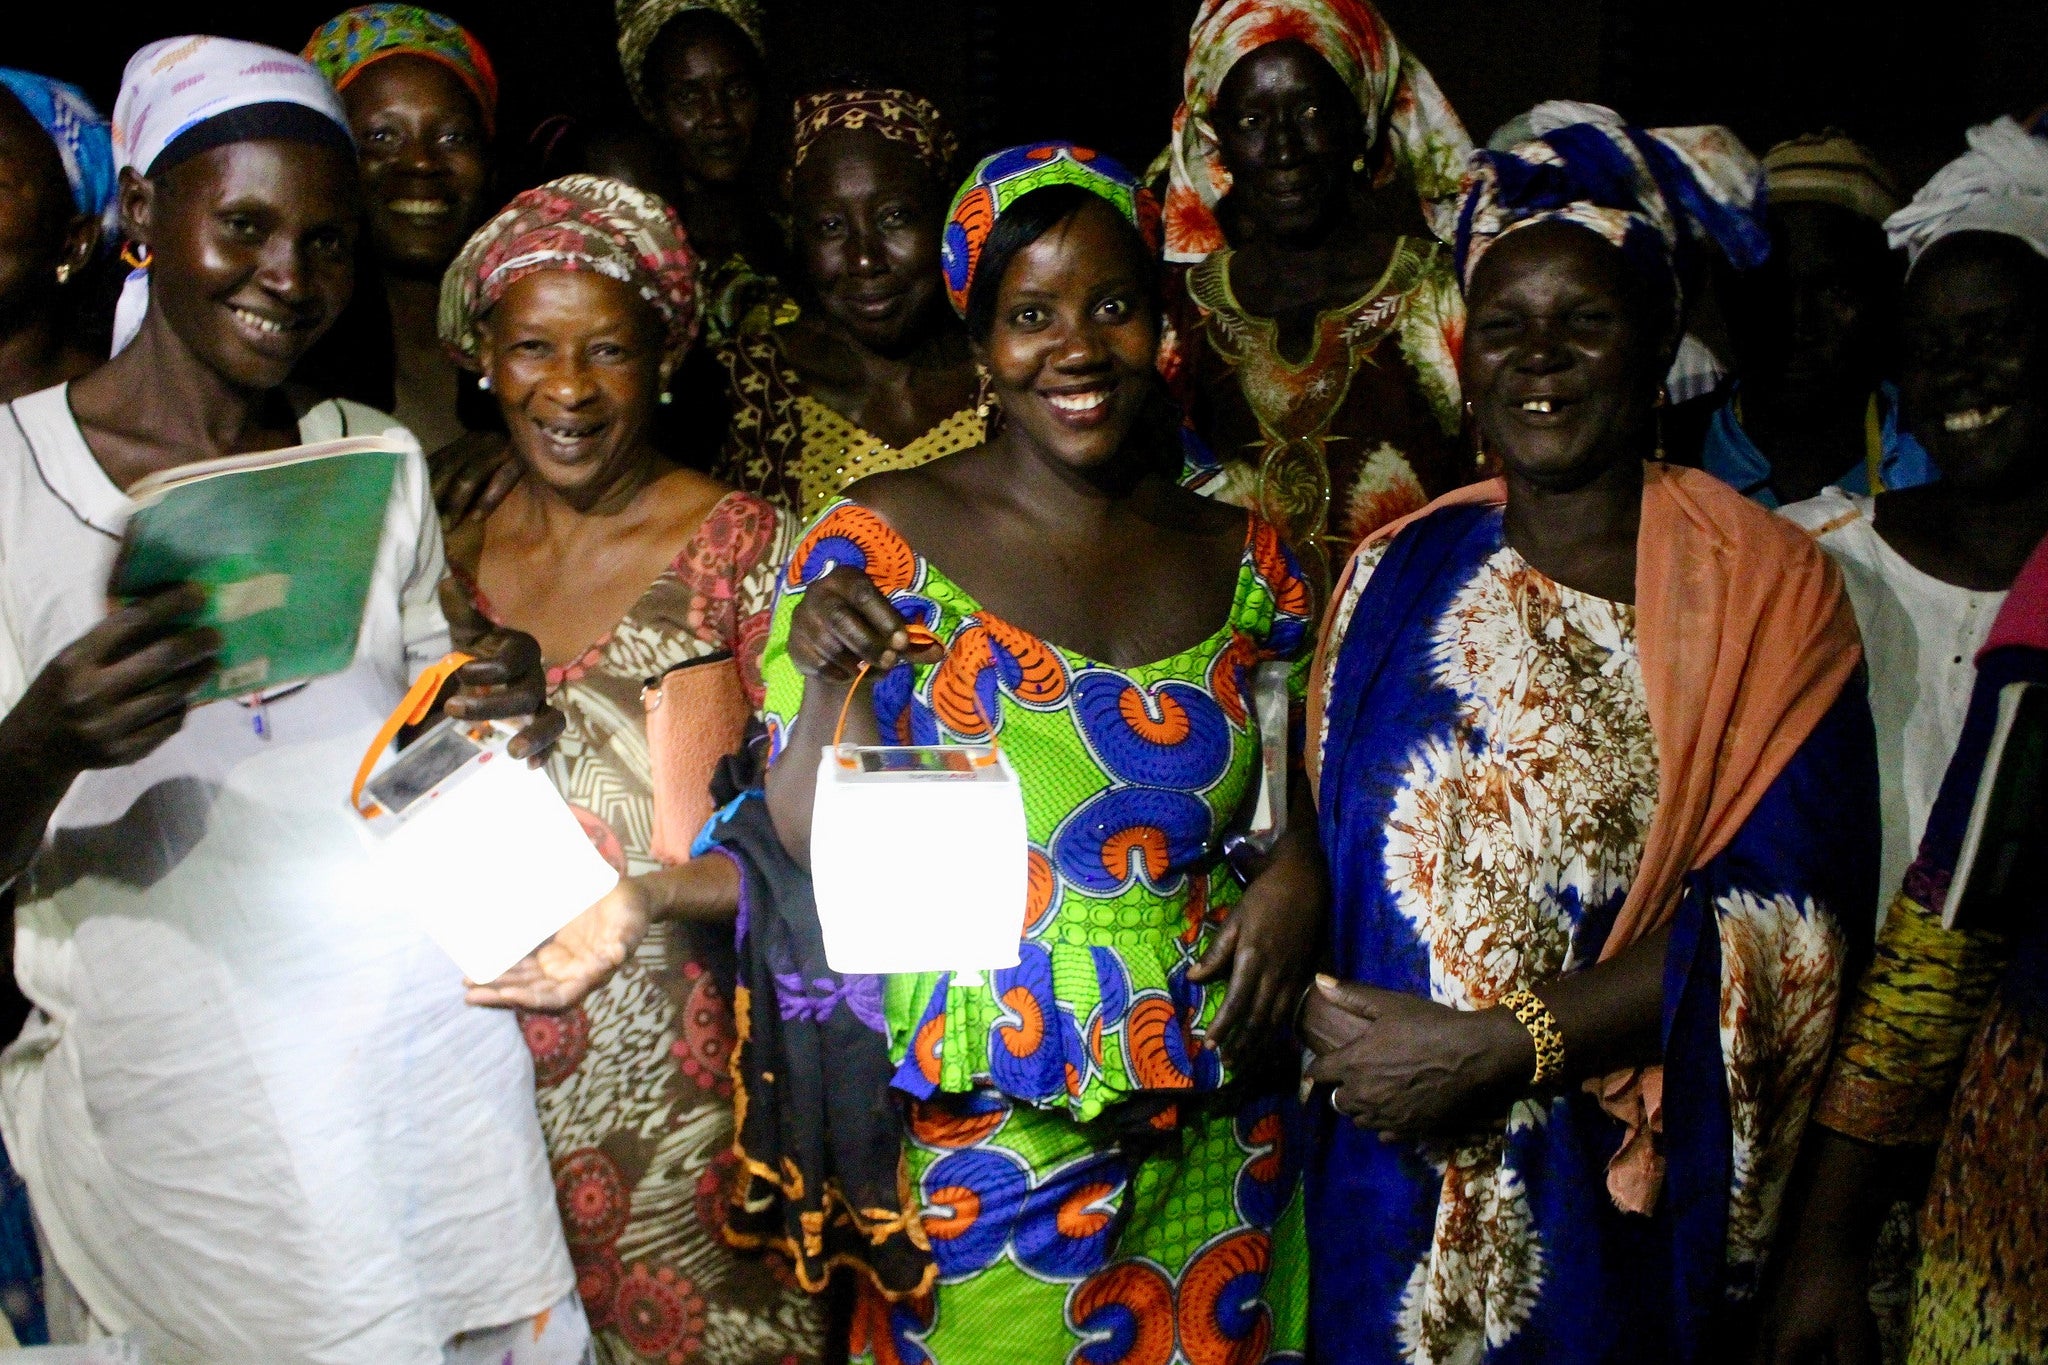 Women in literacy program holding lights.